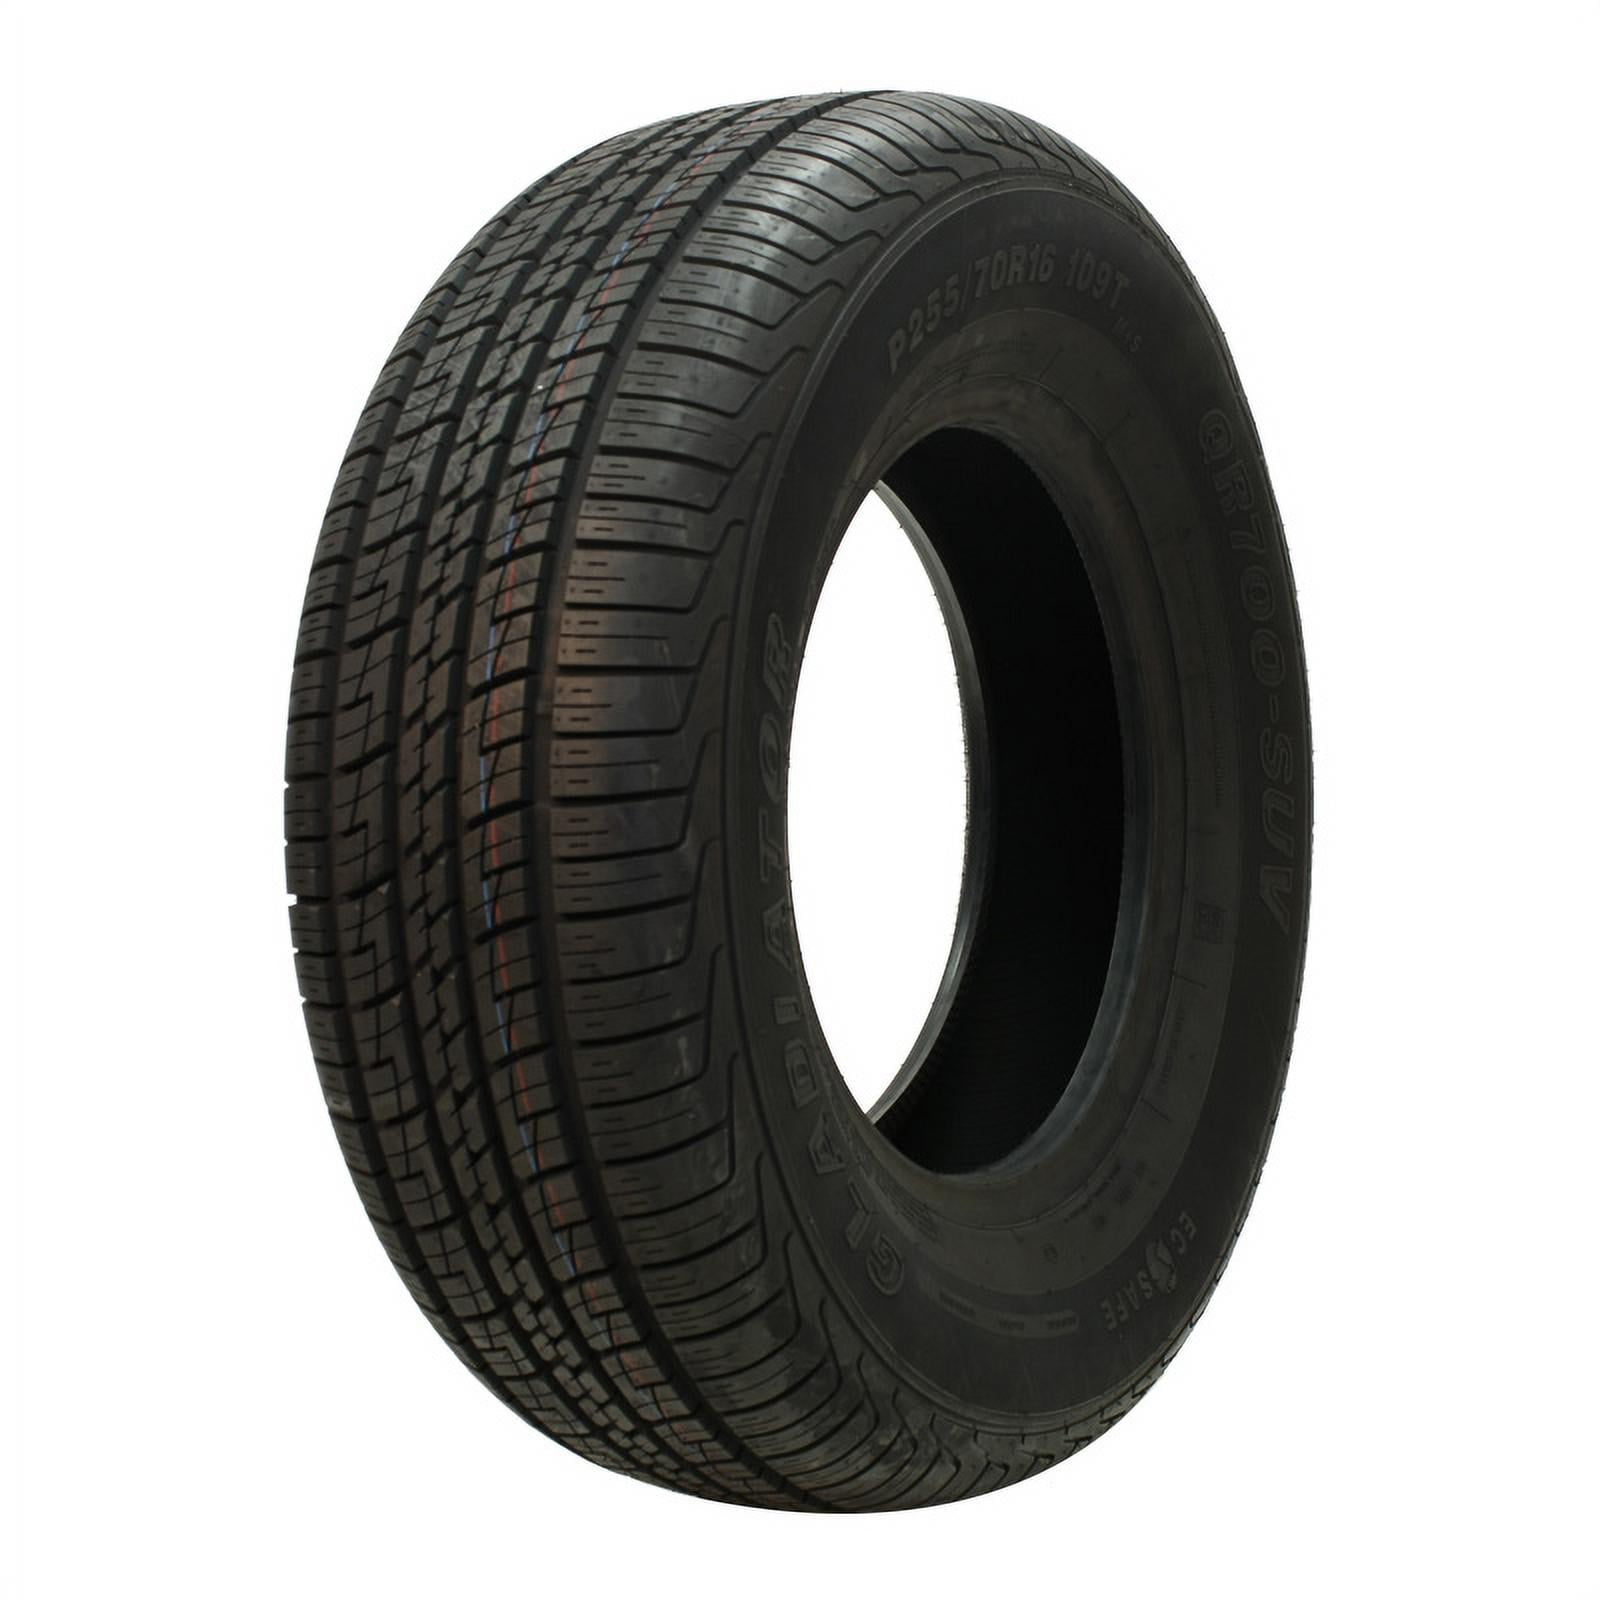 Nokian WR G4 All Season Radial Tire 245/60R18 105H Tire-245/60R18 104V 